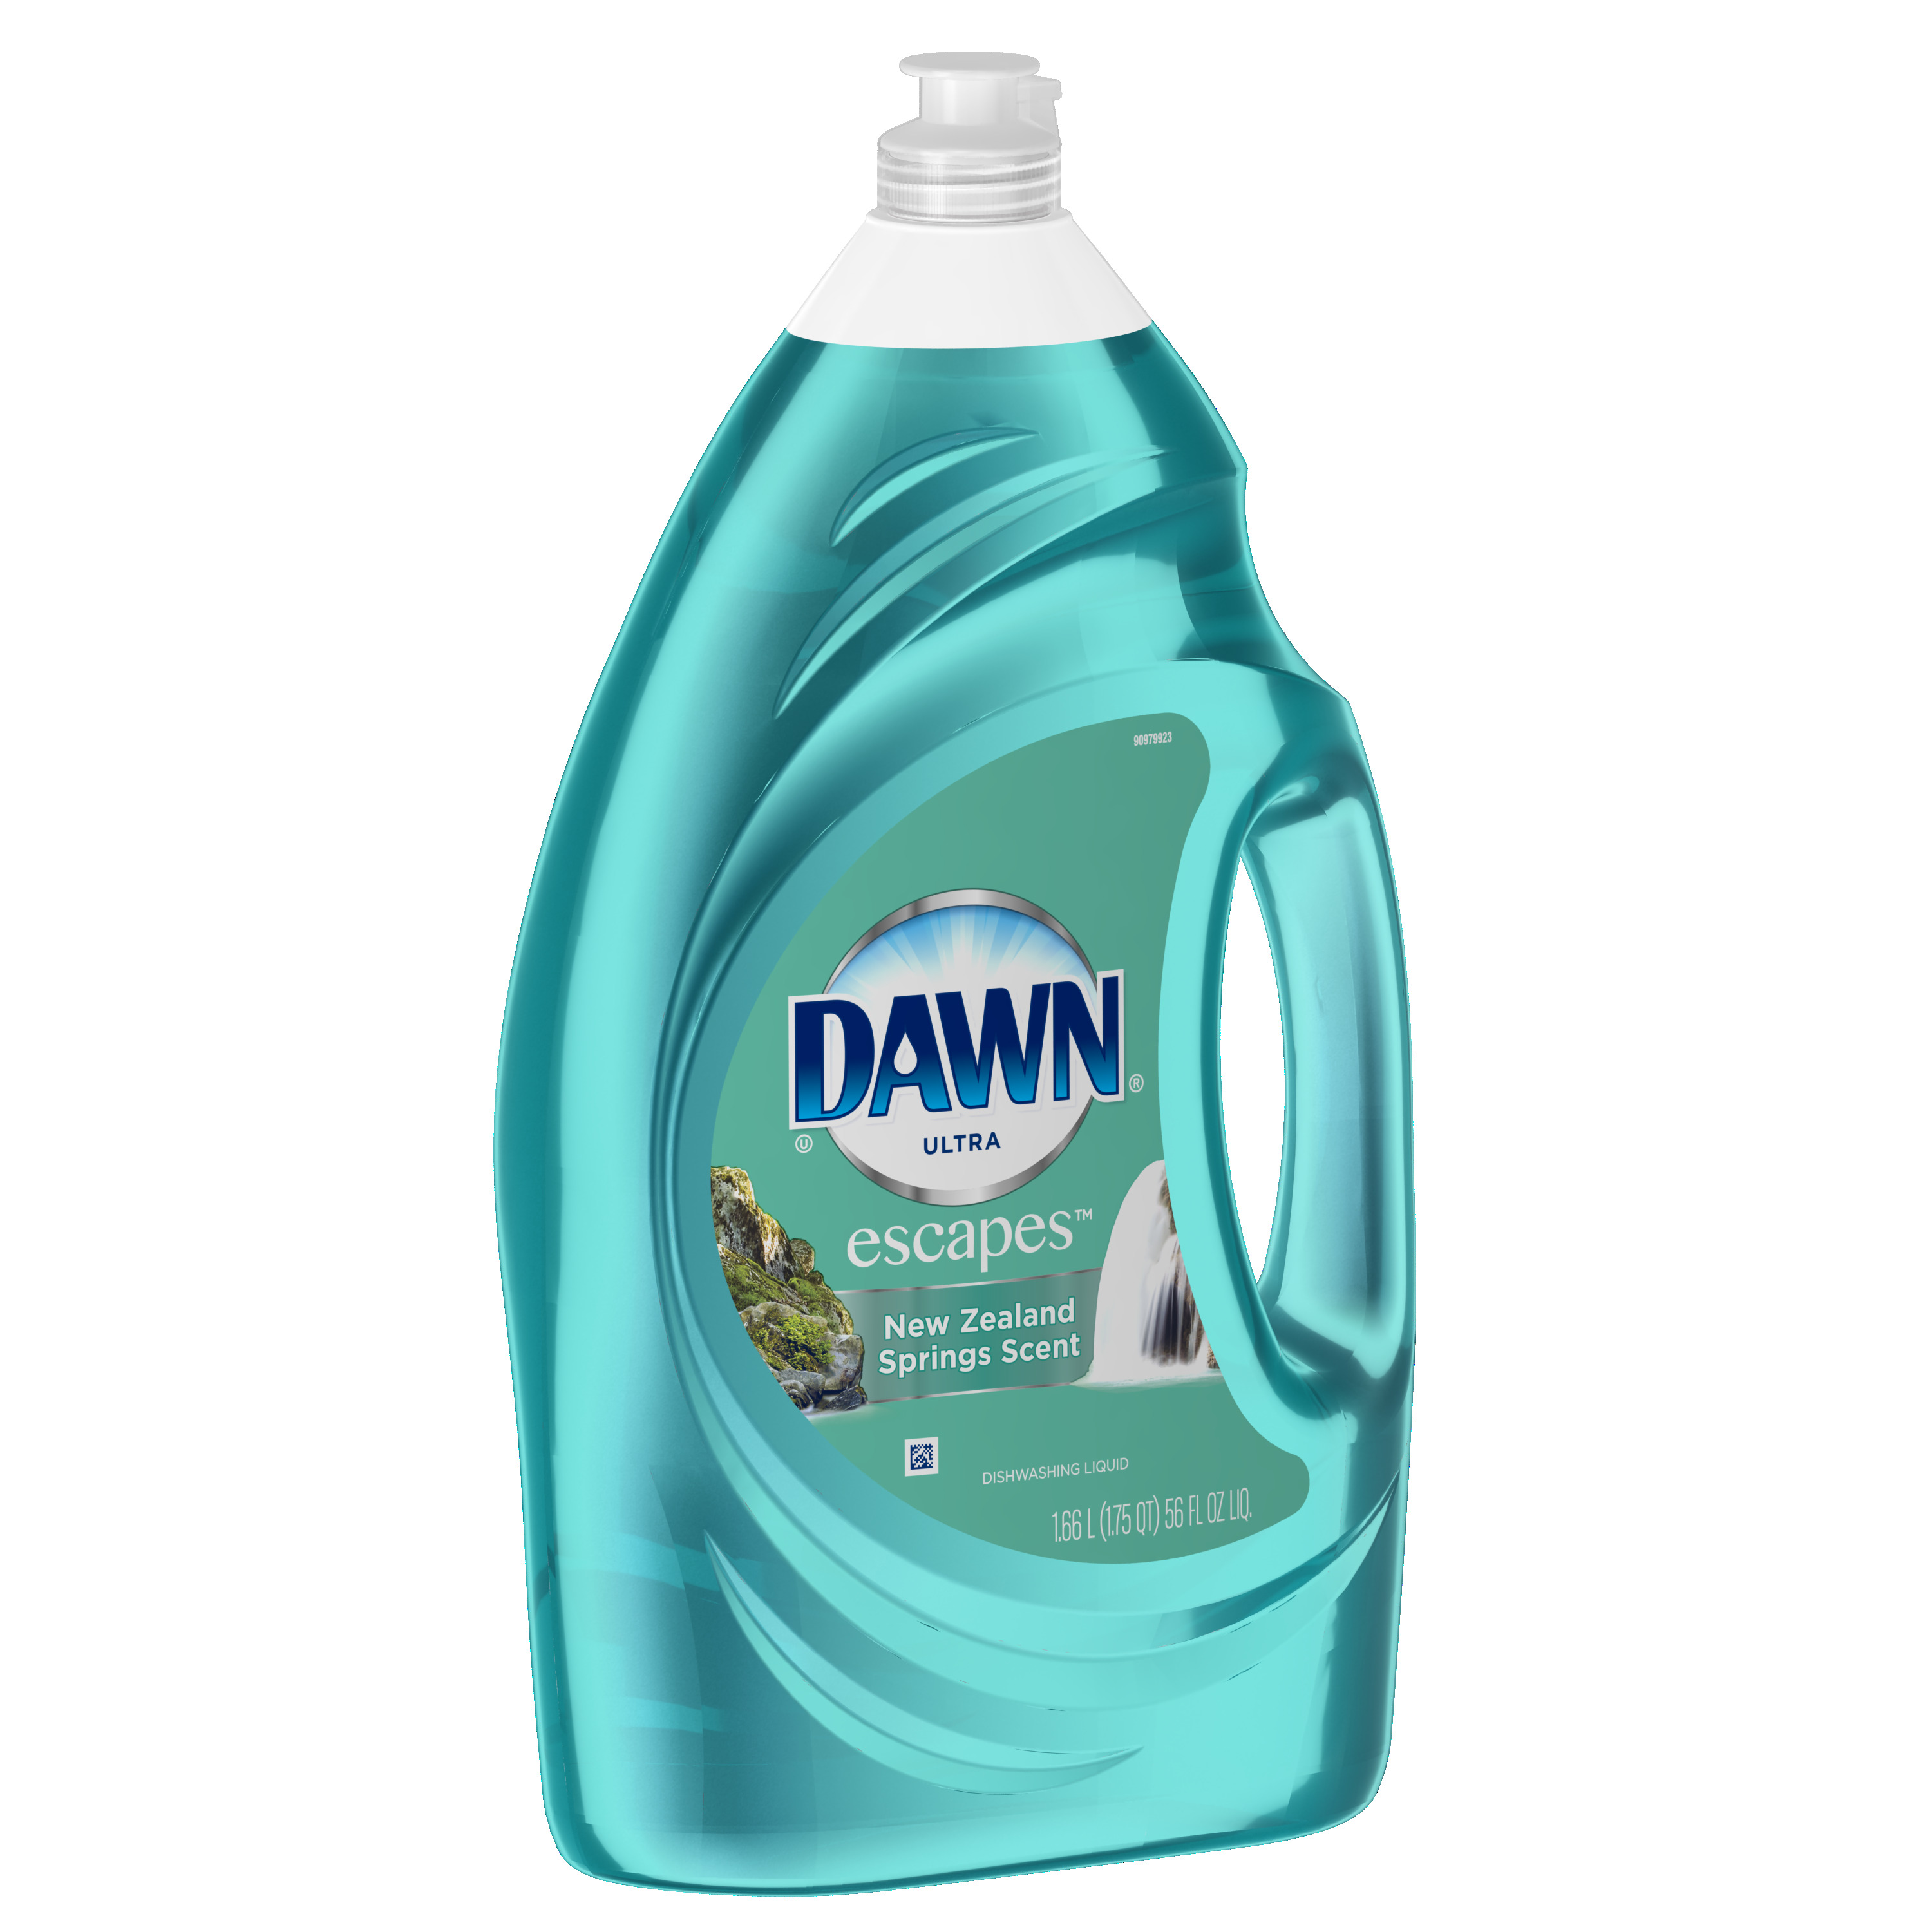 Dawn Escapes Dishwashing Liquid Dish Soap New Zealand Springs, 56 oz - image 2 of 5